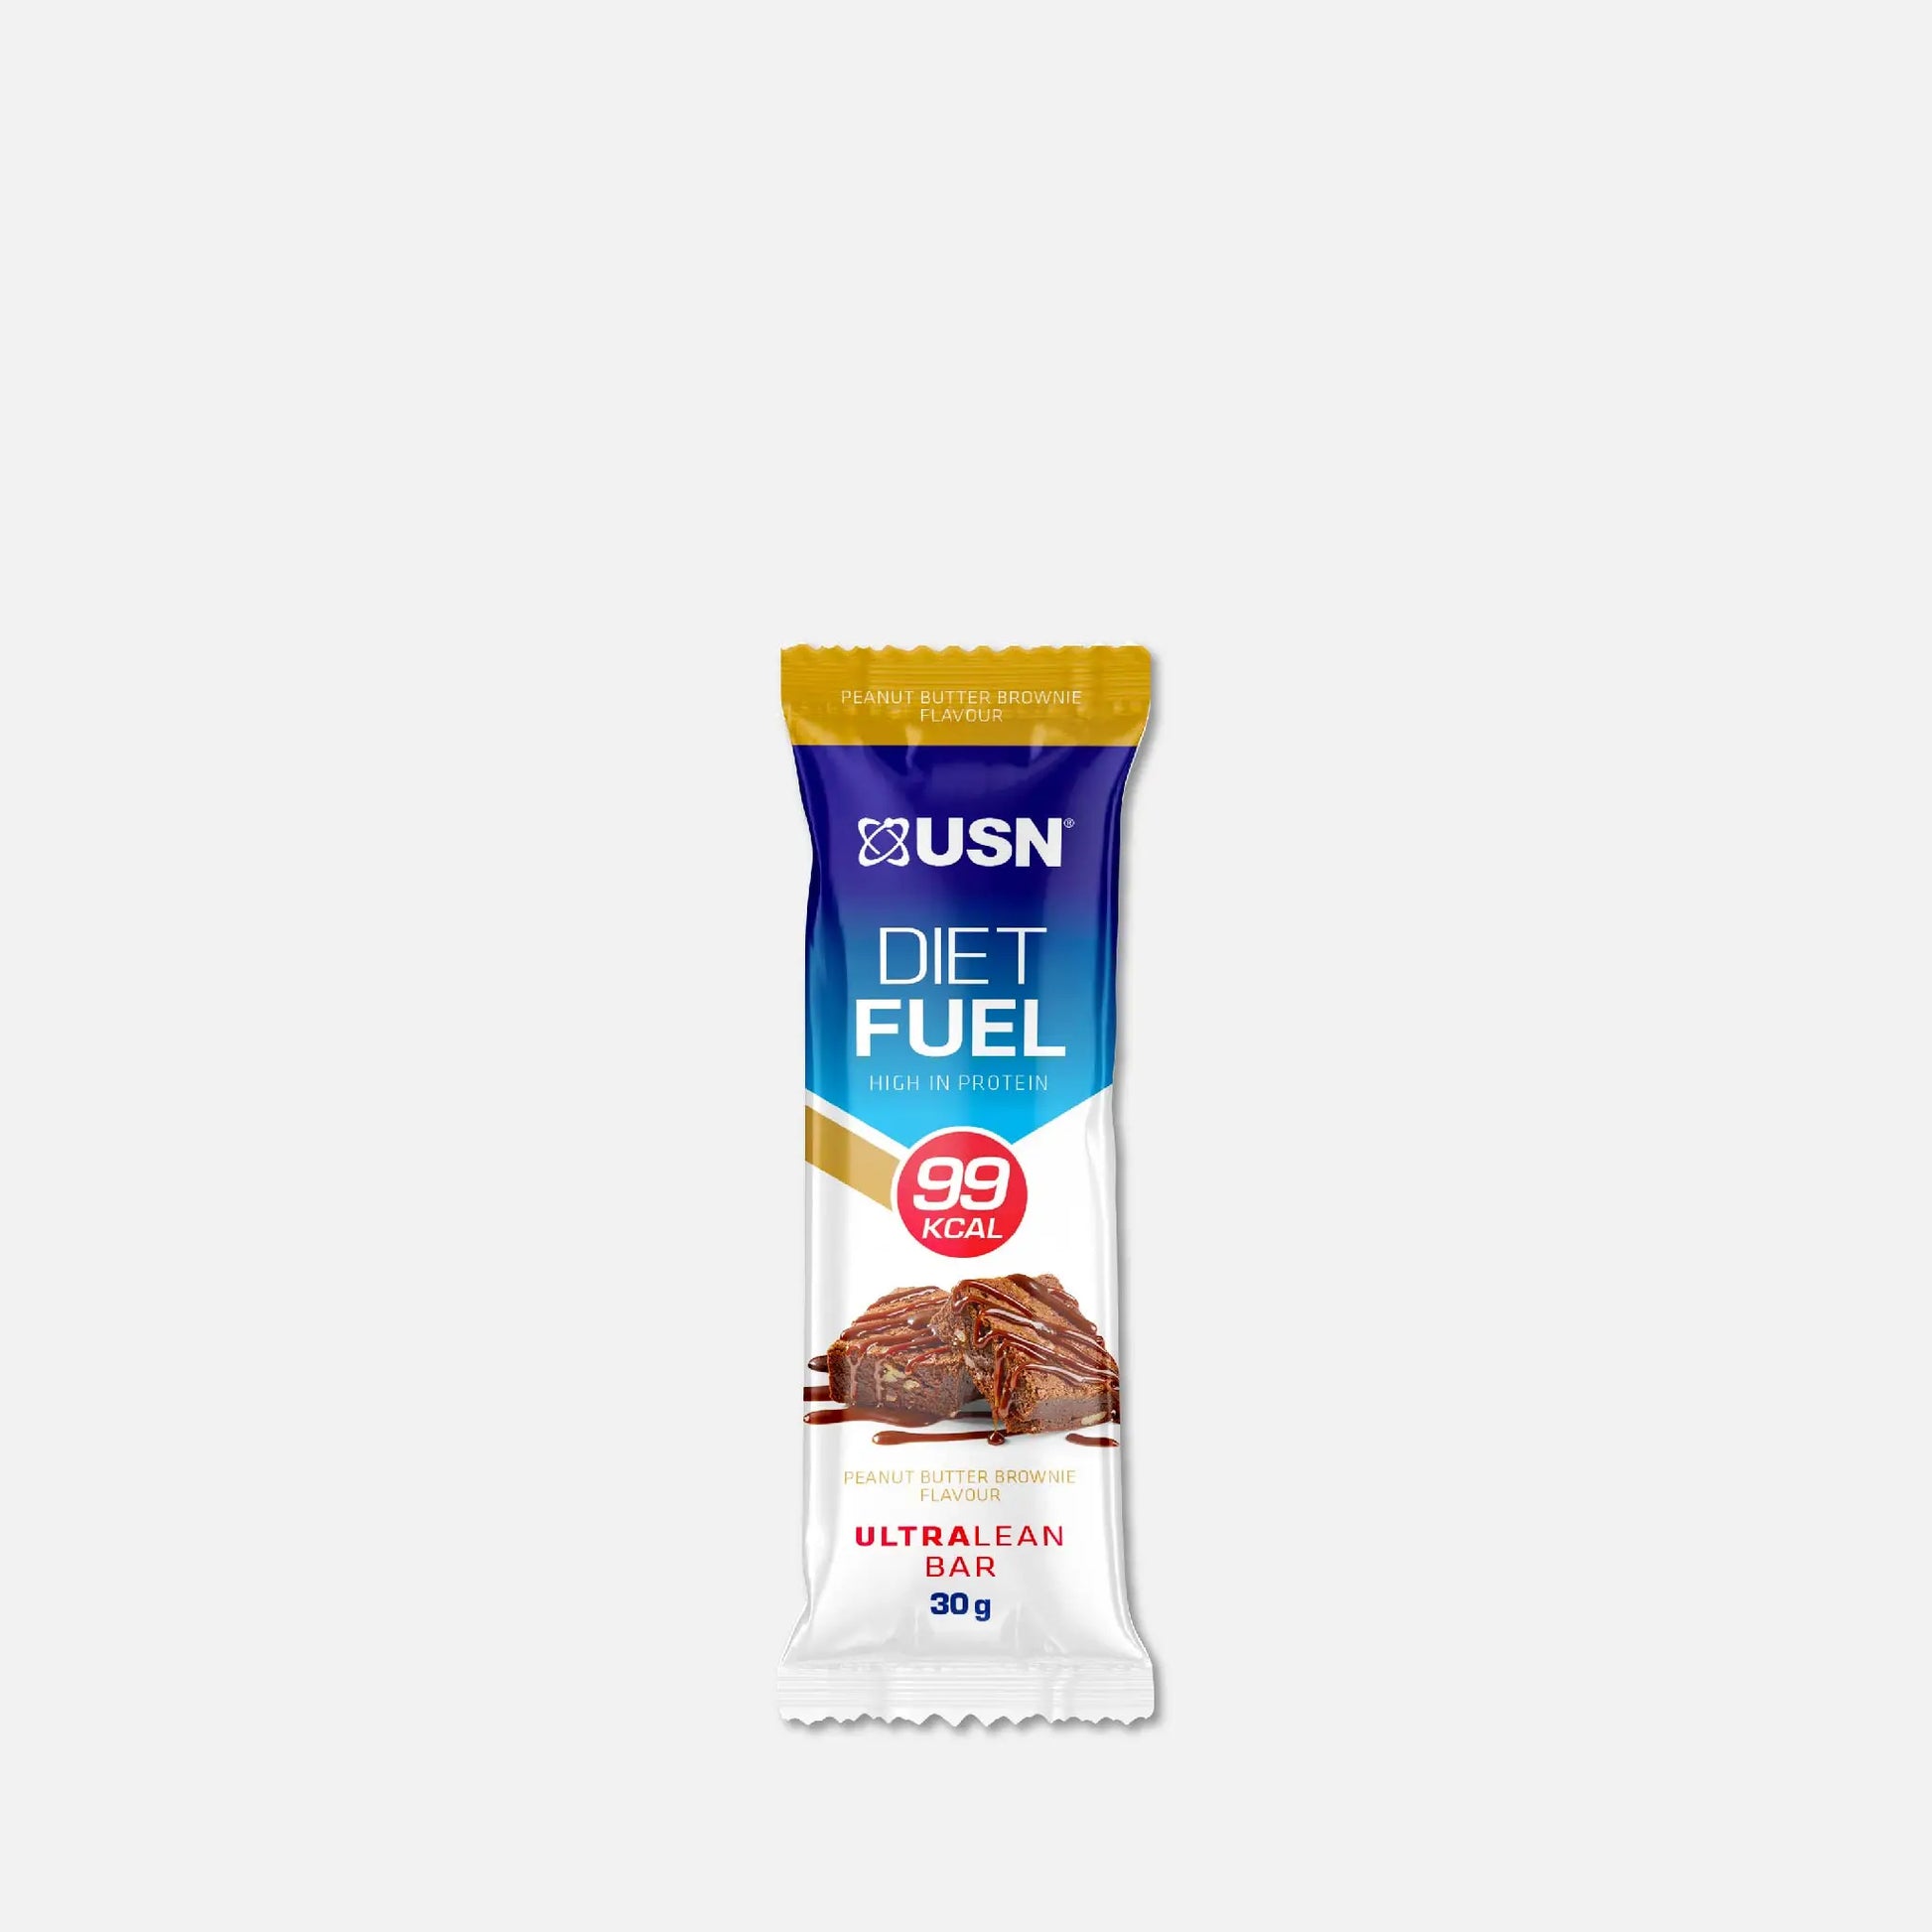 USN-Diet-Fuel-99kcal-bar-peanutbutter-brownie-bar